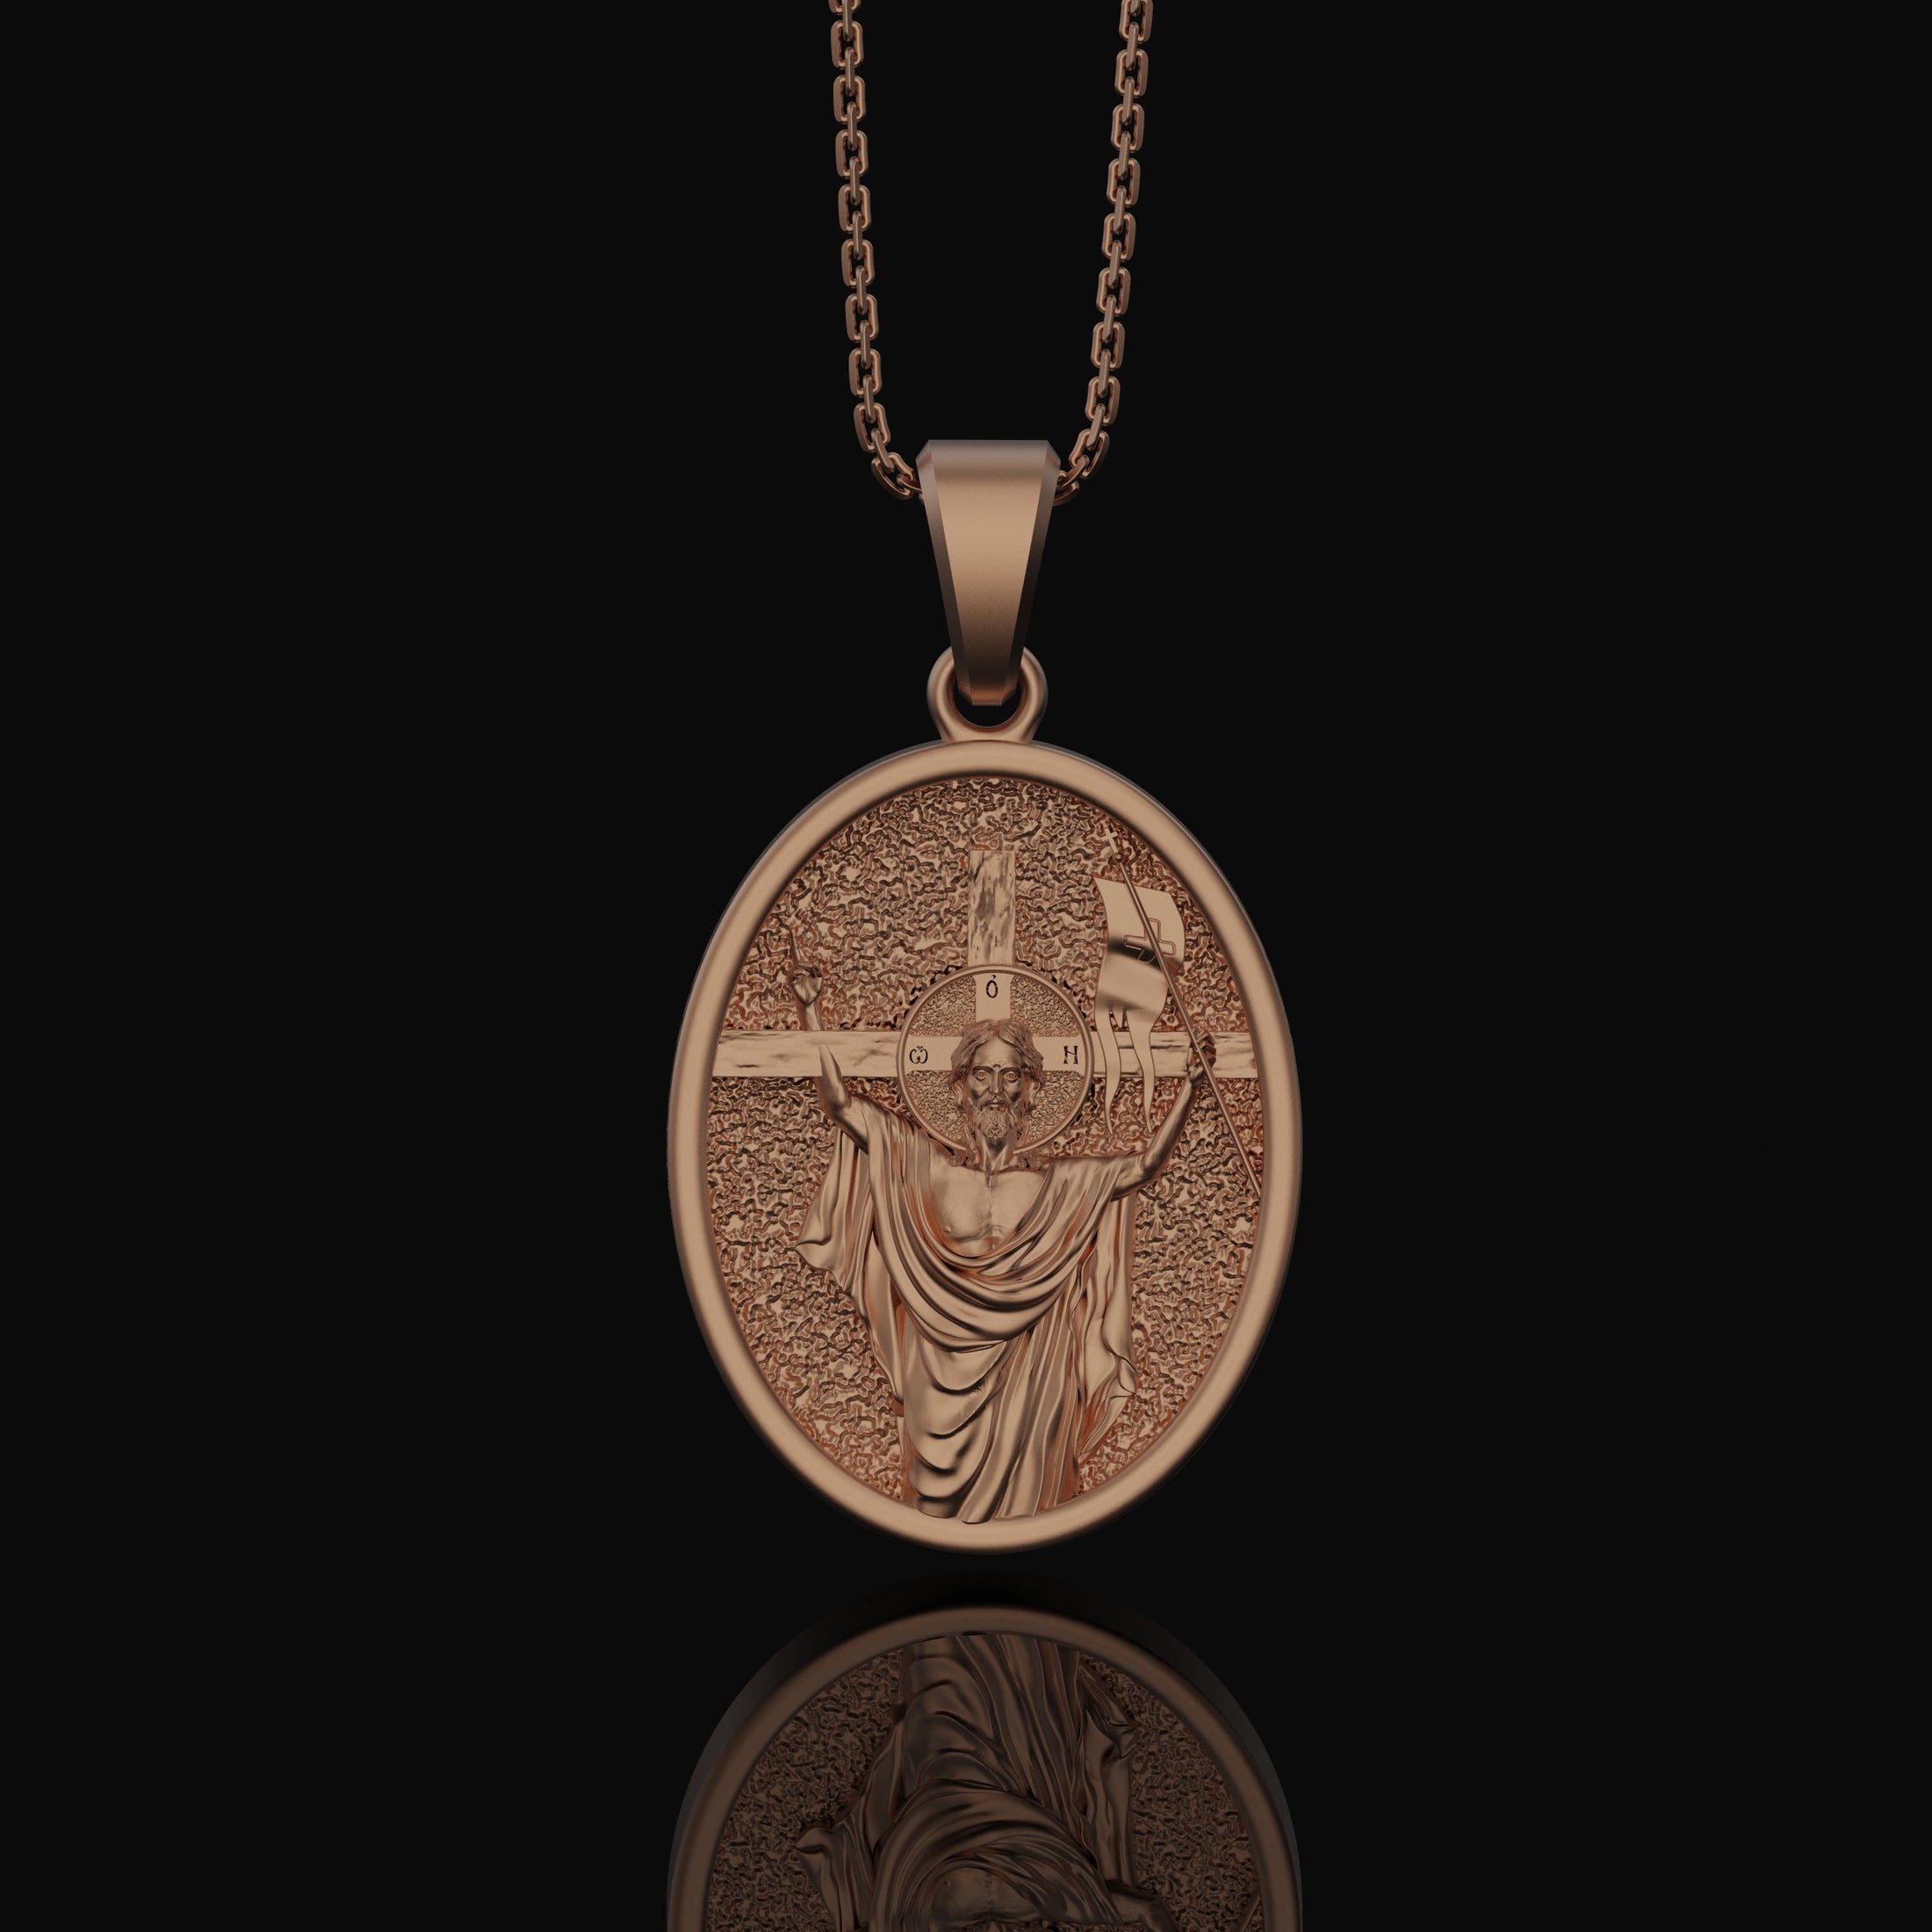 Silver Jesus Crucifixion Necklace - Christian Cross Pendant, Religious Savior Jewelry, Faith Gift